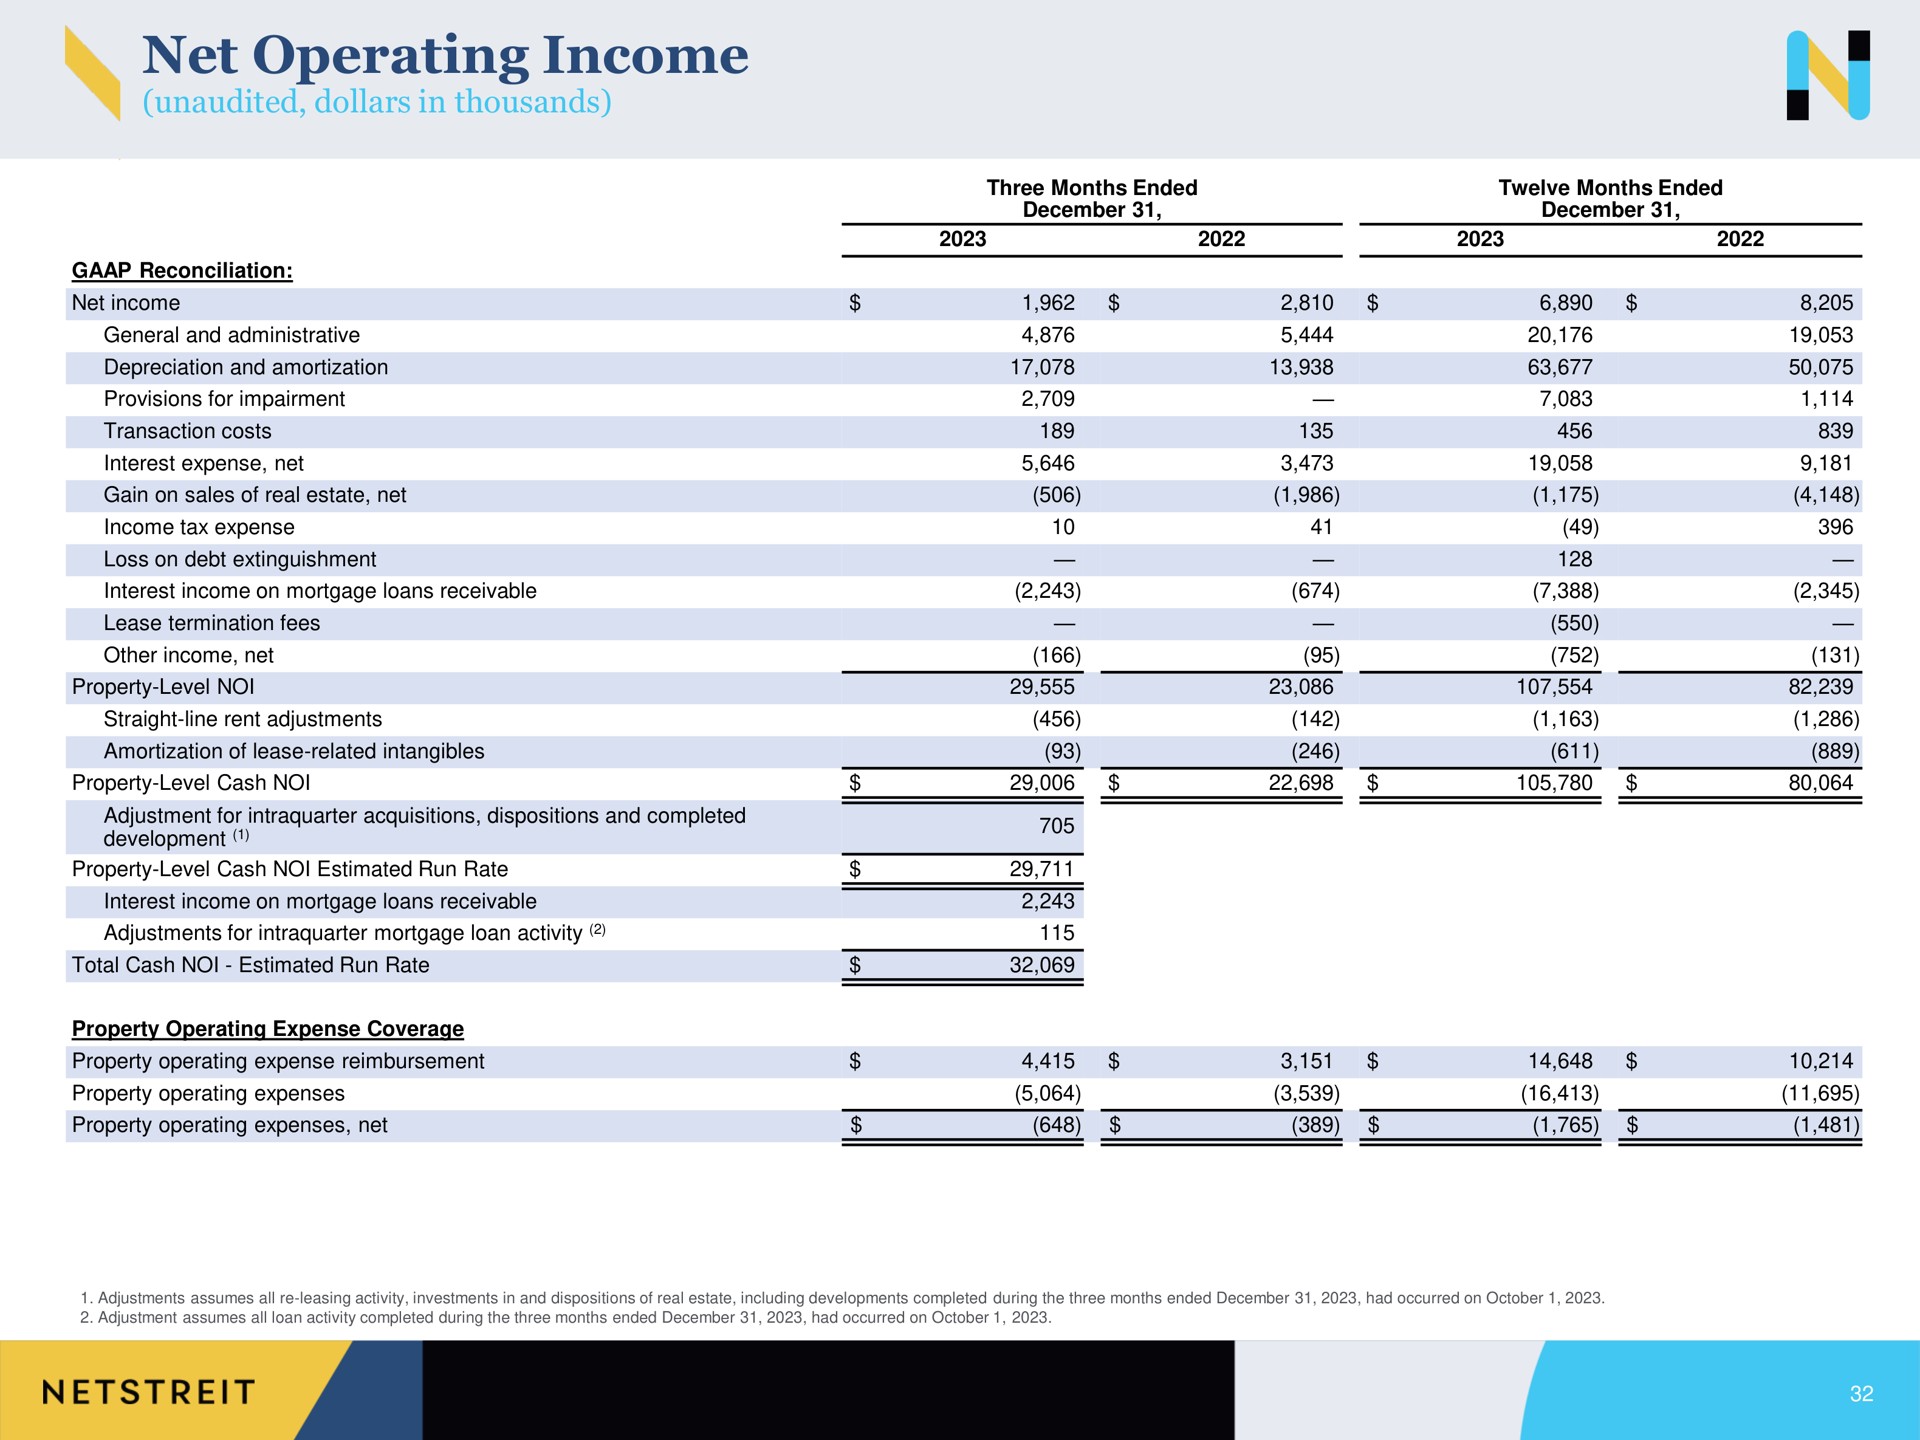 net operating income | Netstreit